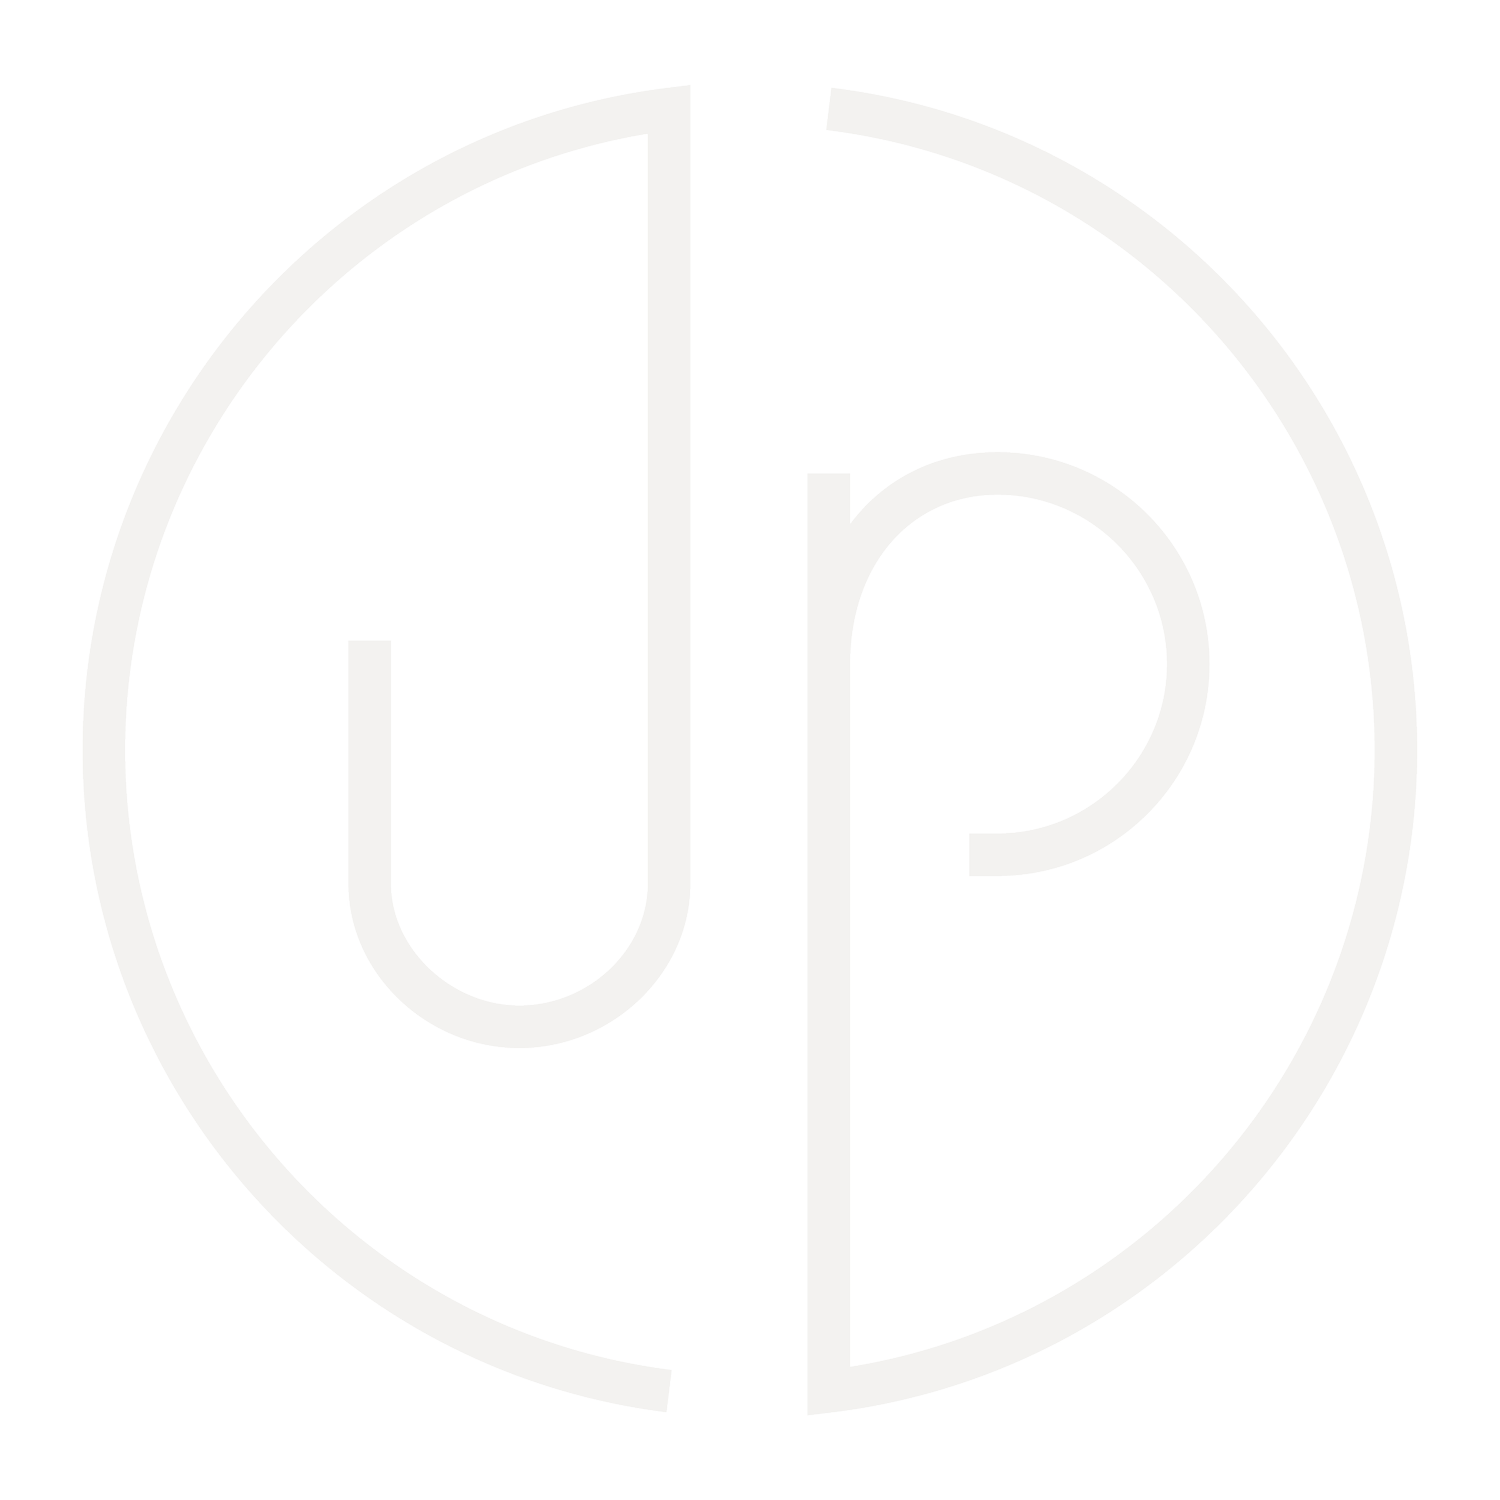 Upbrand Ltd